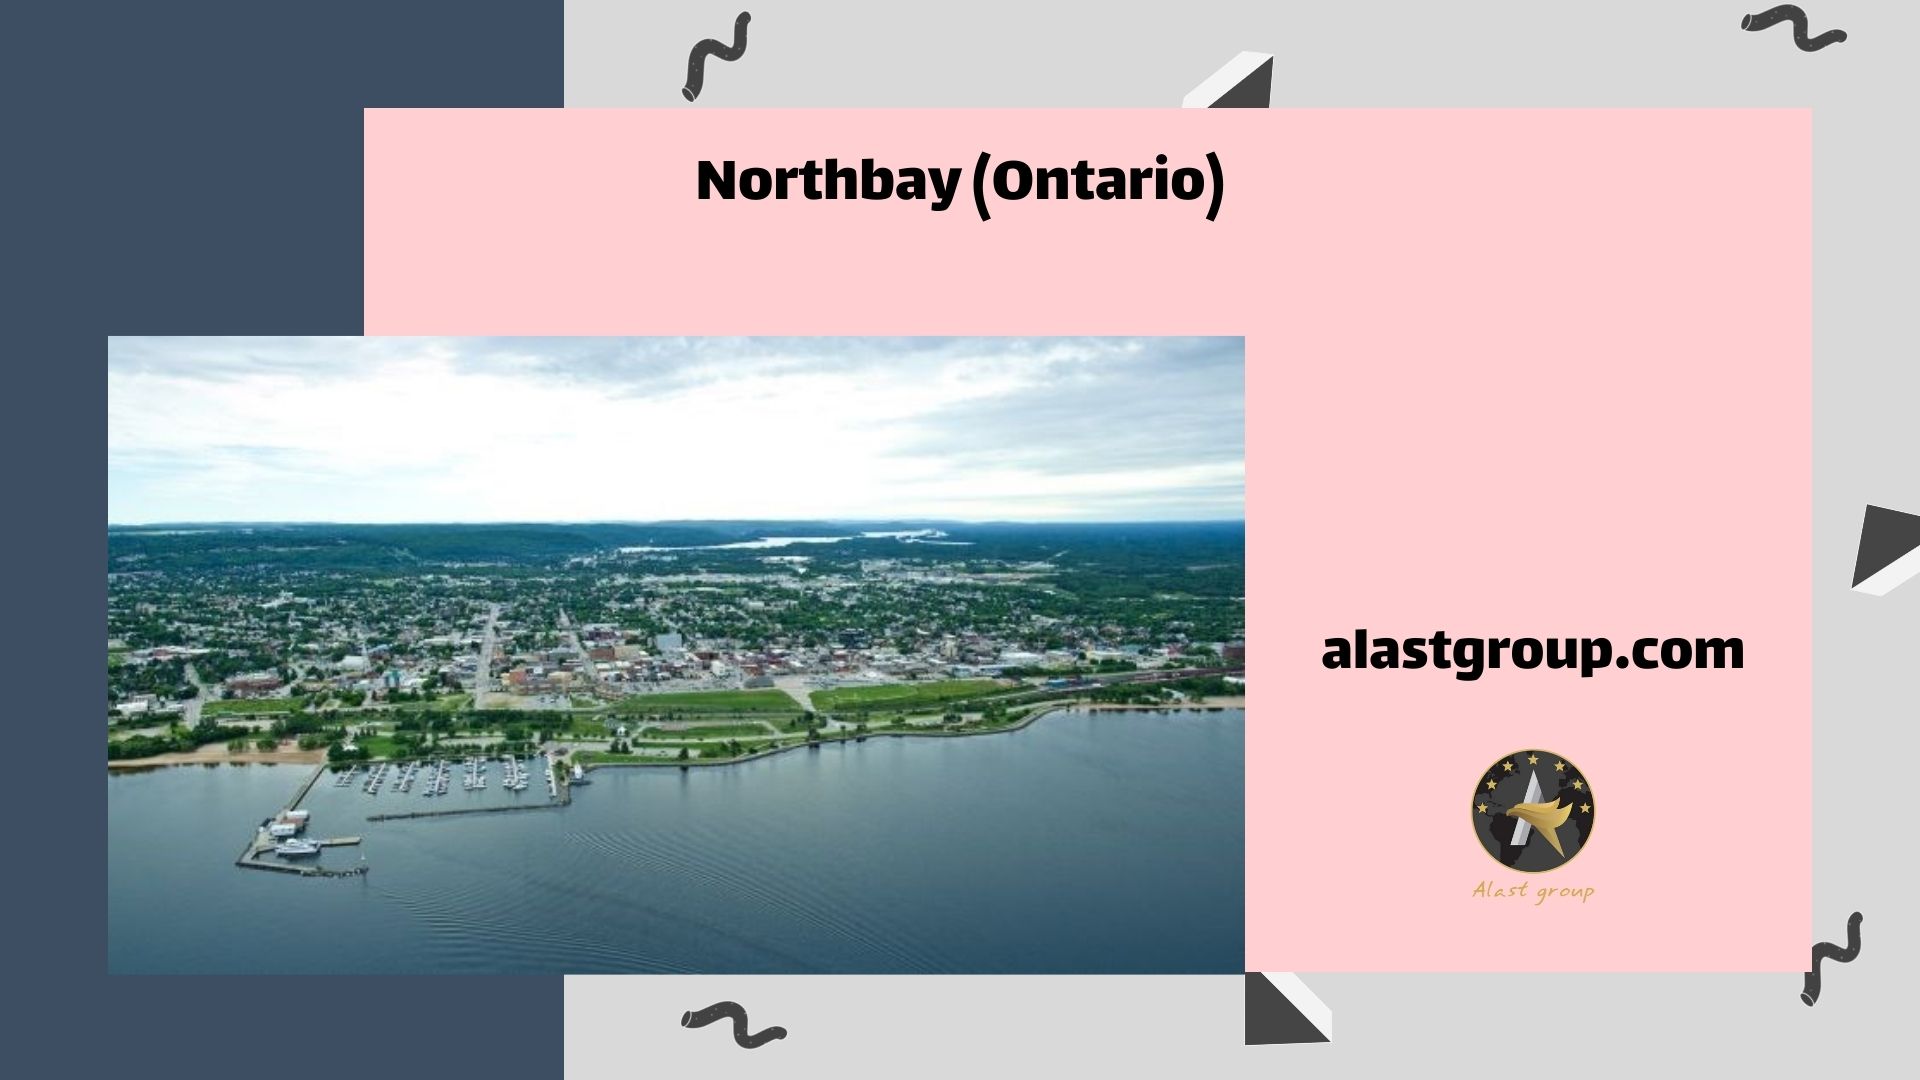 نام شهر: Northbay (Ontario)